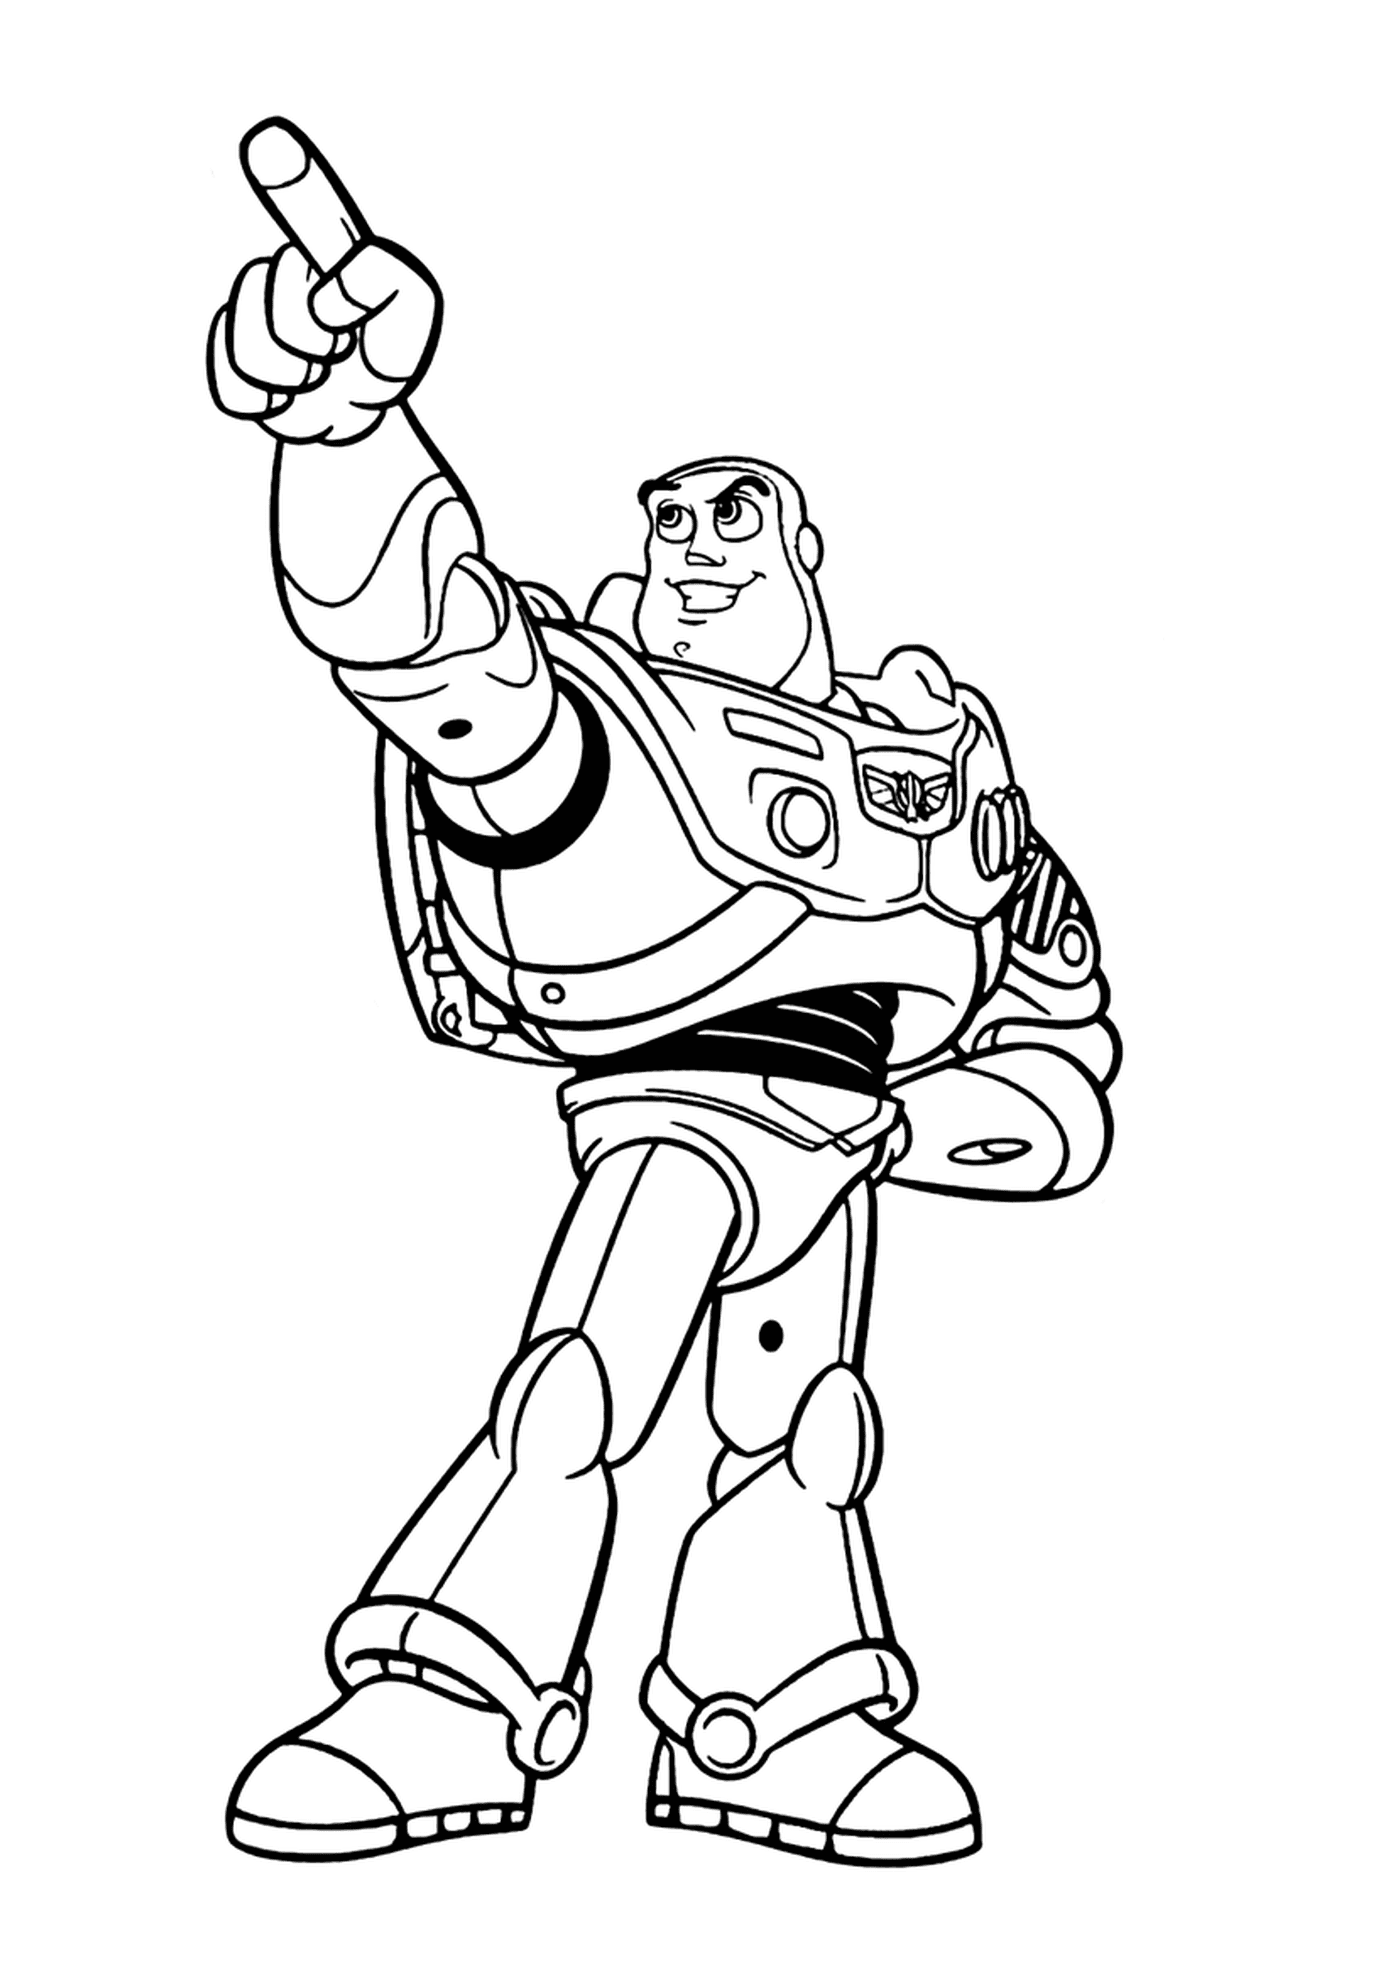  Buzz Lightyear, fearless star champion 